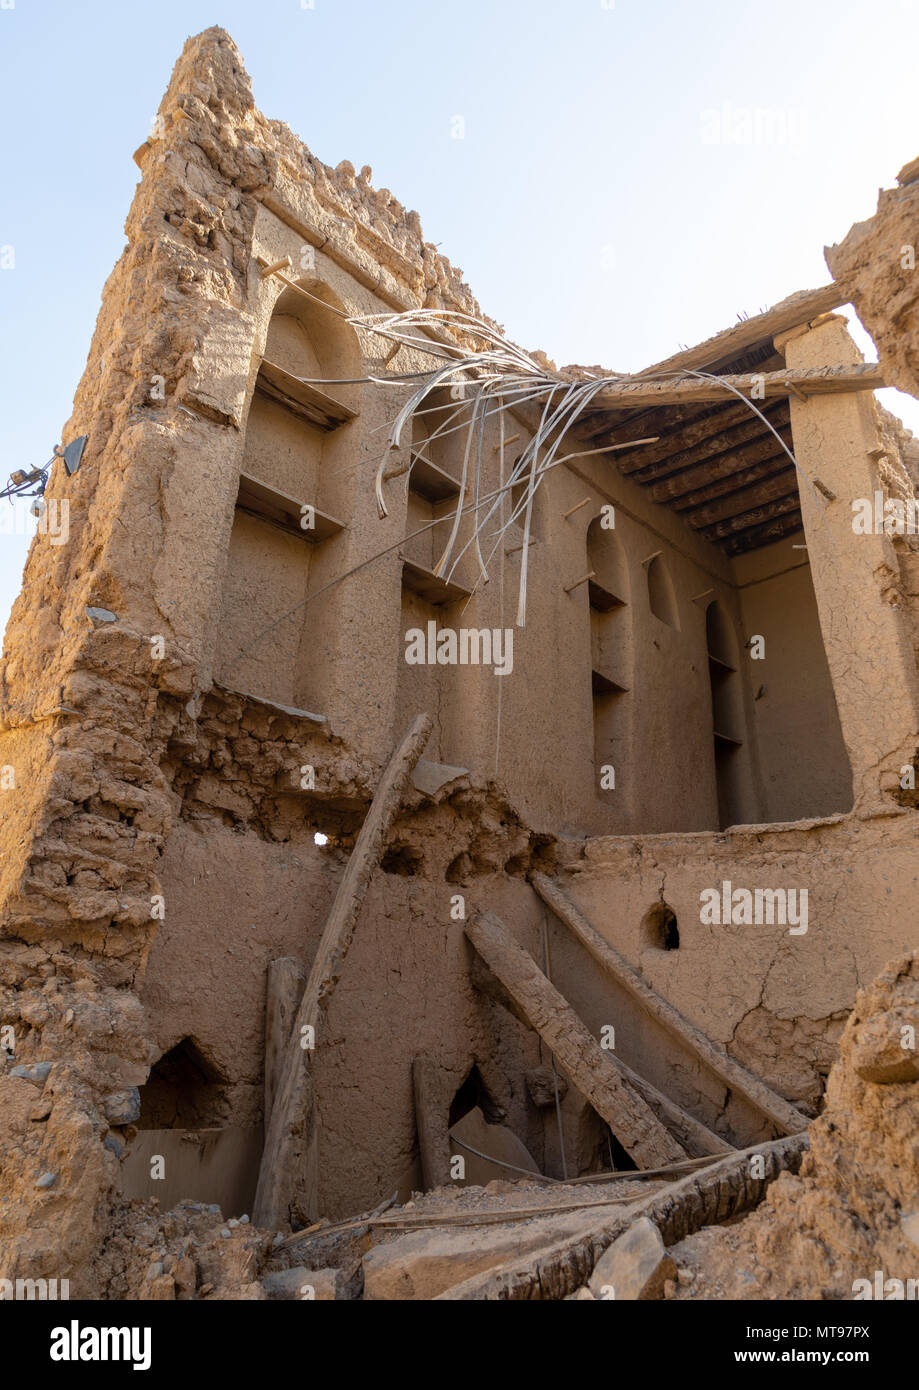 Old abandoned house in a village, Ad Dakhiliyah Region, Al Hamra, Oman Stock Photo